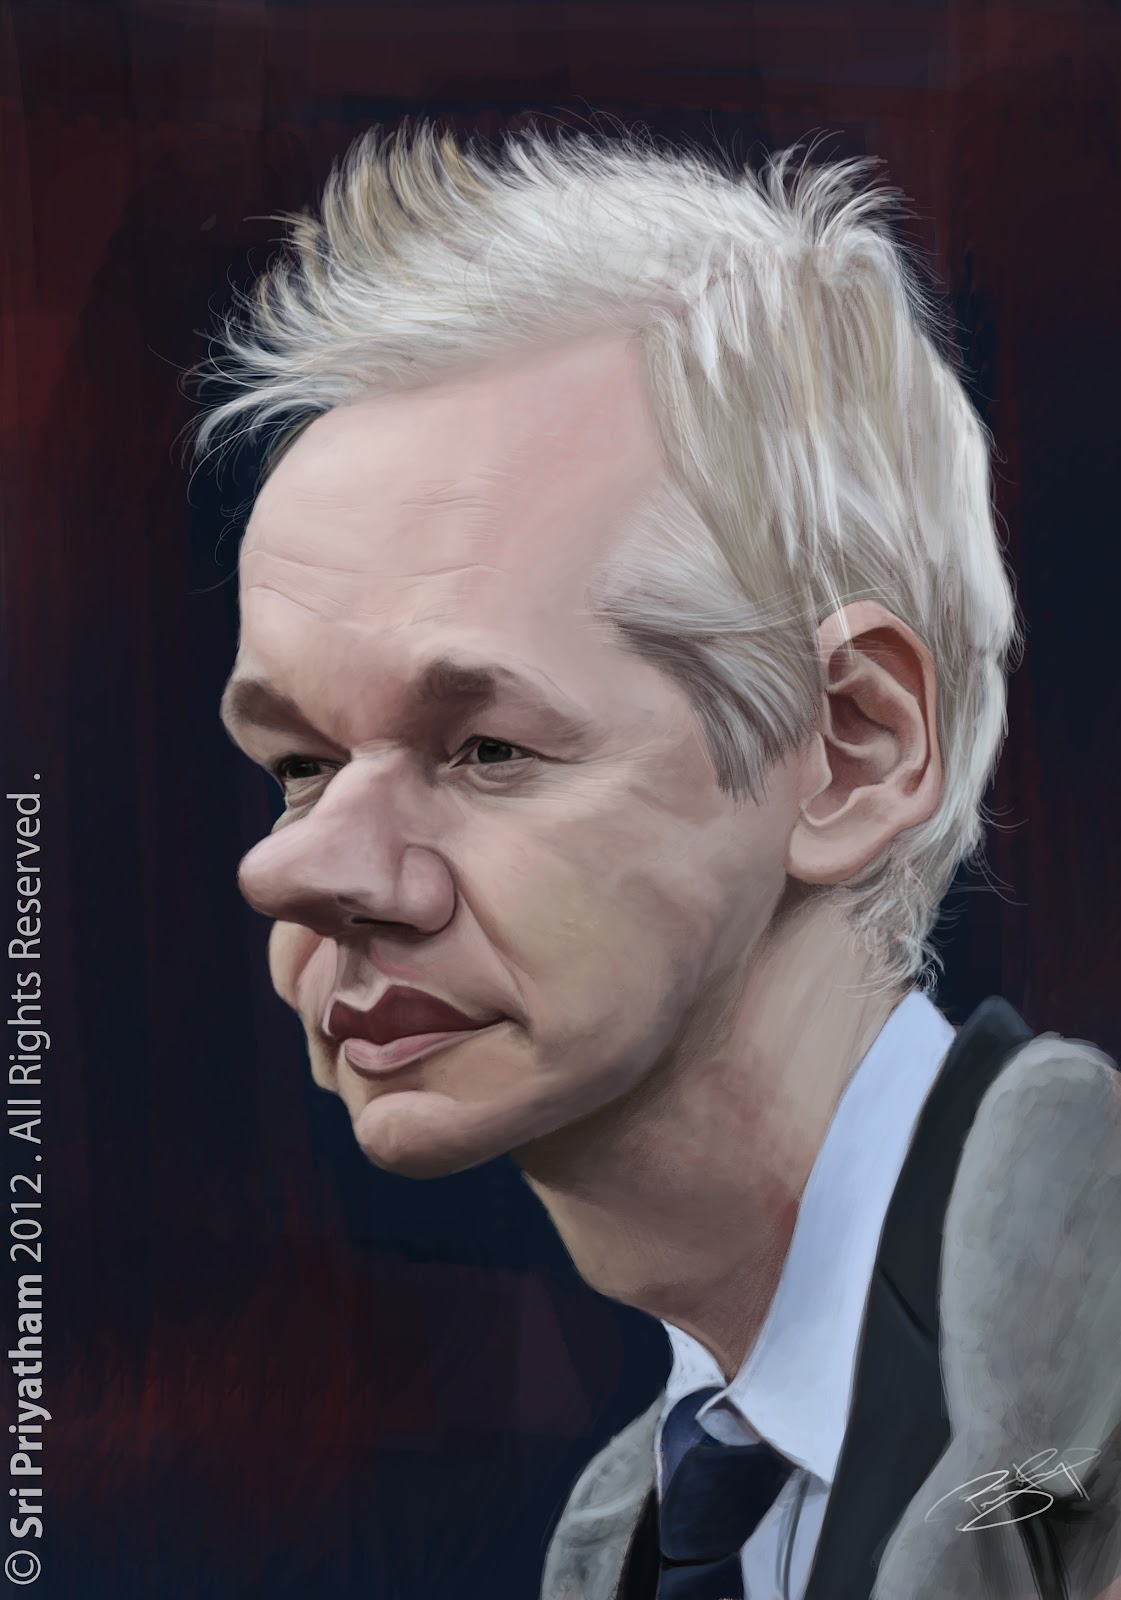 https://blogger.googleusercontent.com/img/b/R29vZ2xl/AVvXsEhGN5LpyzwZjDrotn-028Hp9hqTIHjRm2-8qoB2qBCS36FSB5BE2x7ezo6yiBWe97hdm9IEnStSUhNvfZ0Gfq4t9W0DA7onM9OV5beNj7b2yvpMfZaYNUZ7YhB4hbD13sHAsYZ5Ep1w17w/s1600/Julian+Assange.jpg